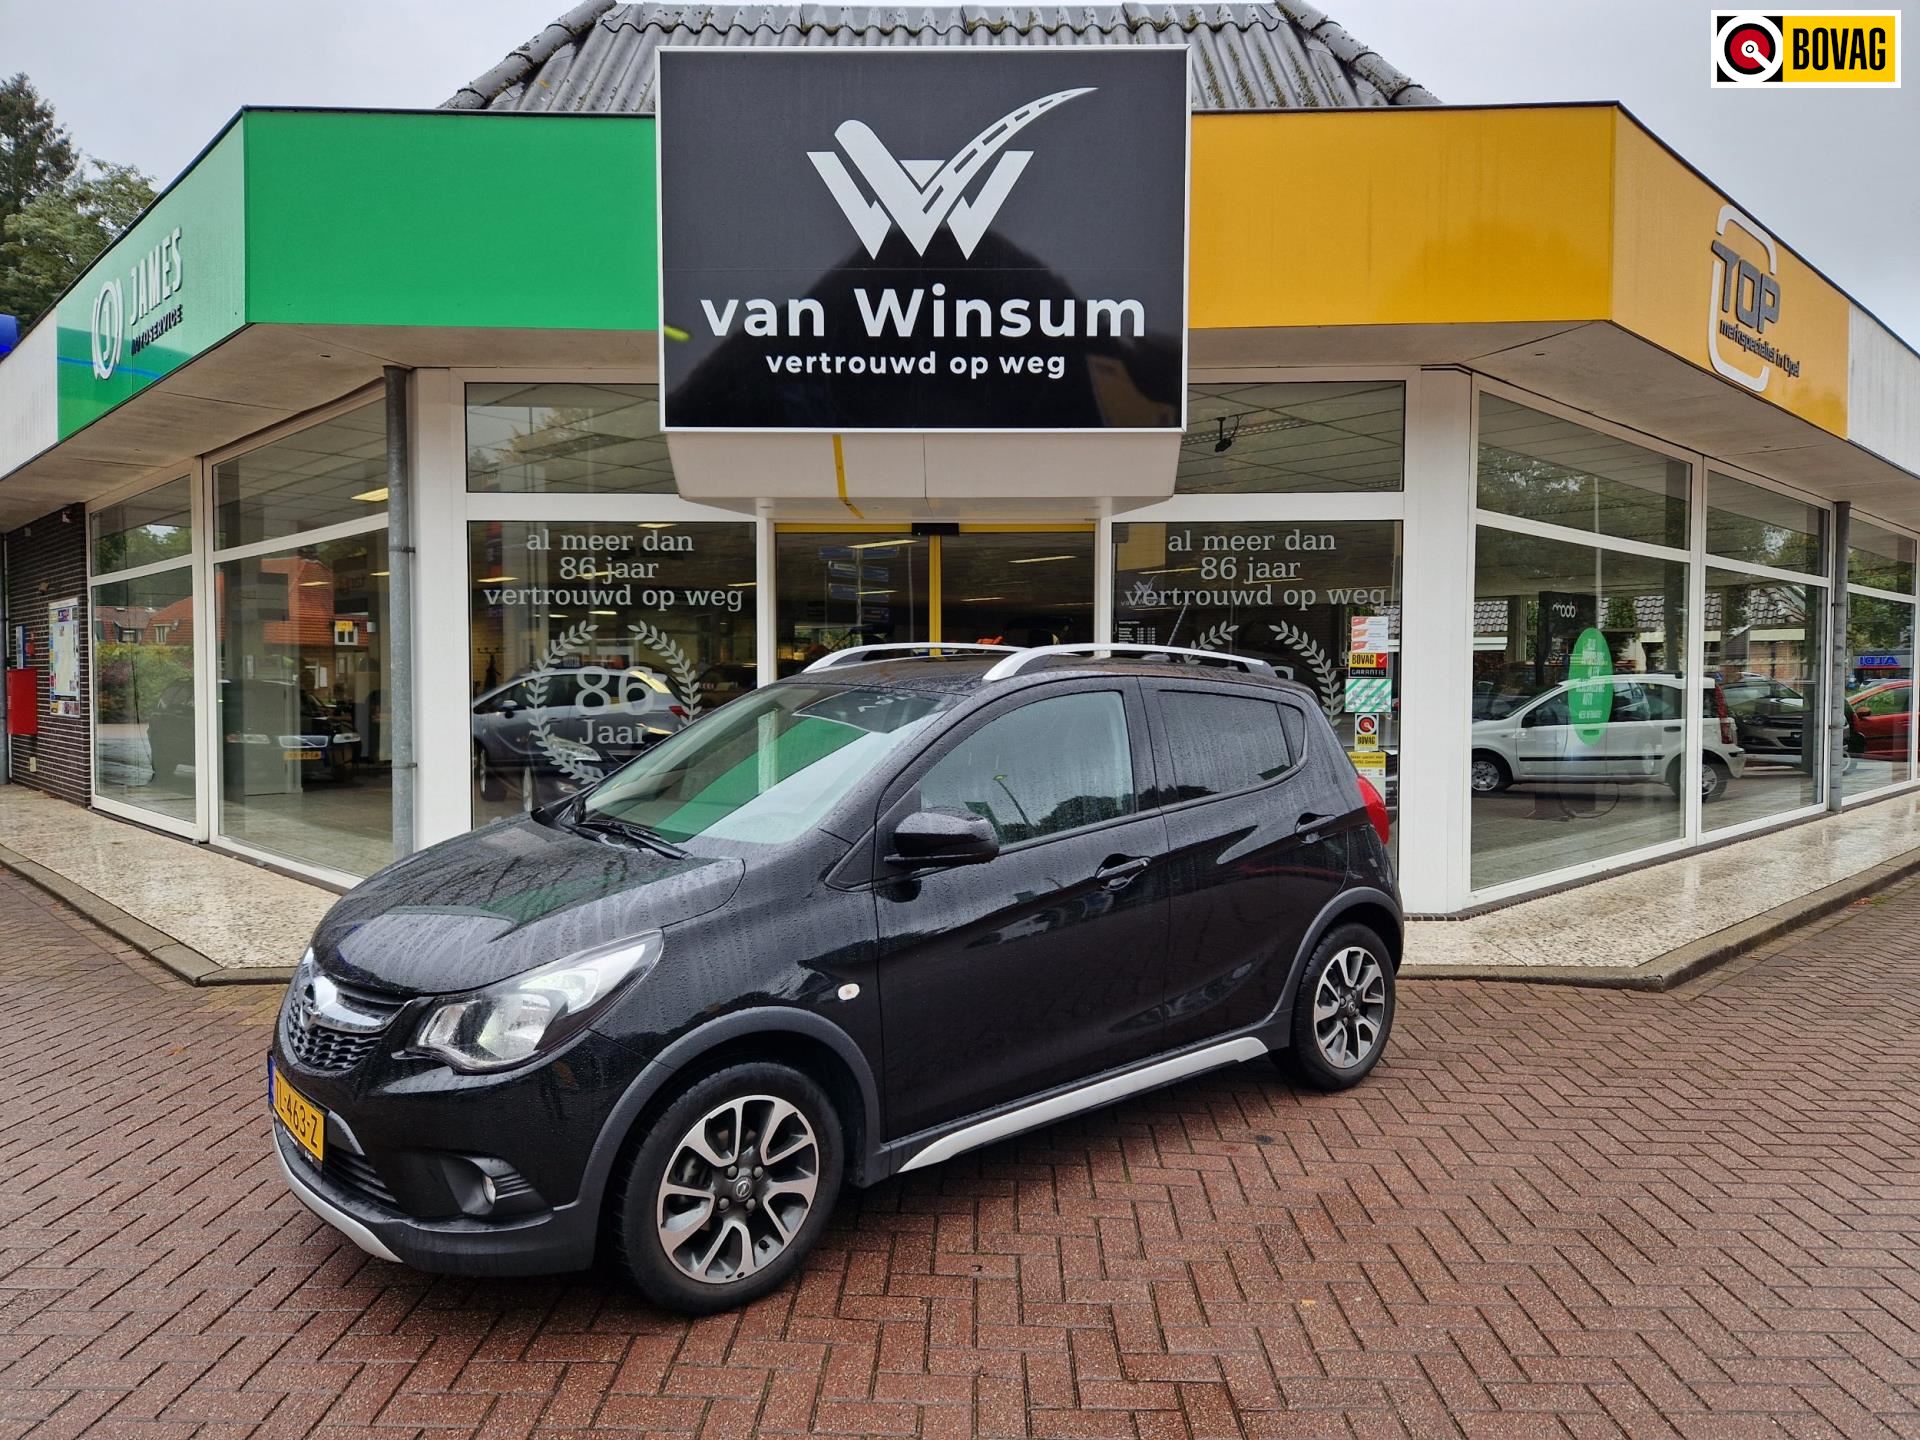 Opel KARL occasion - Autobedrijf G. Van Winsum B.V.